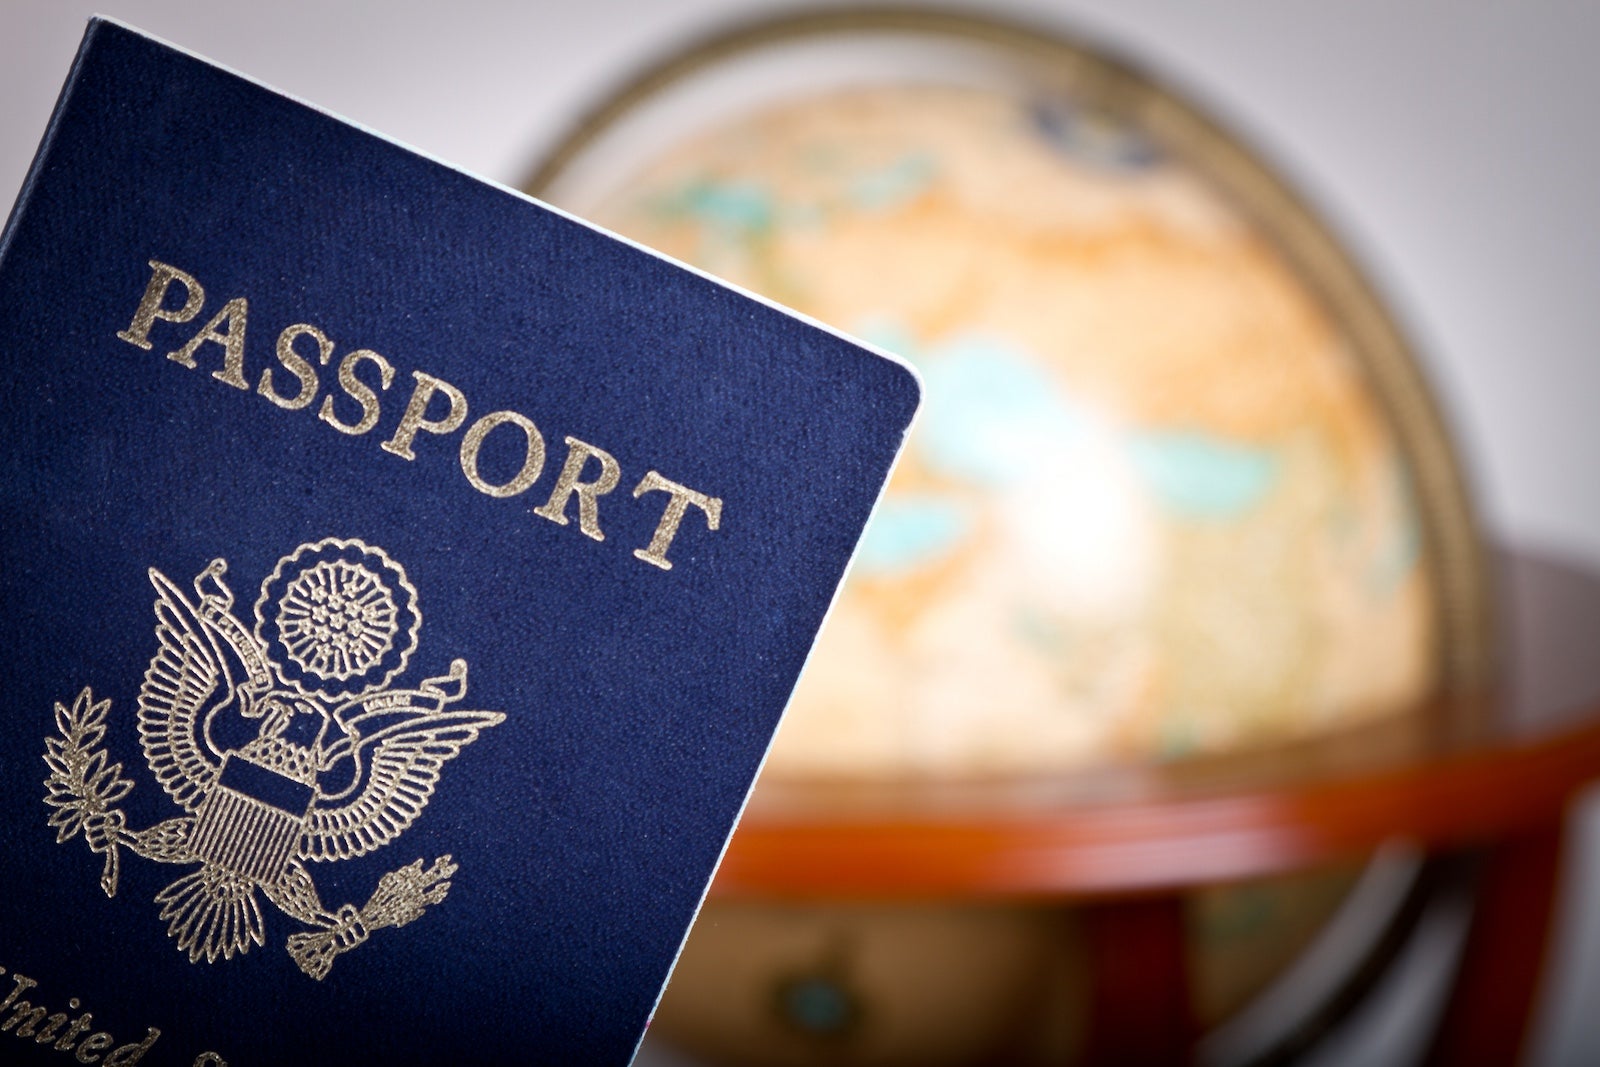 U.S. passport in front of a globe